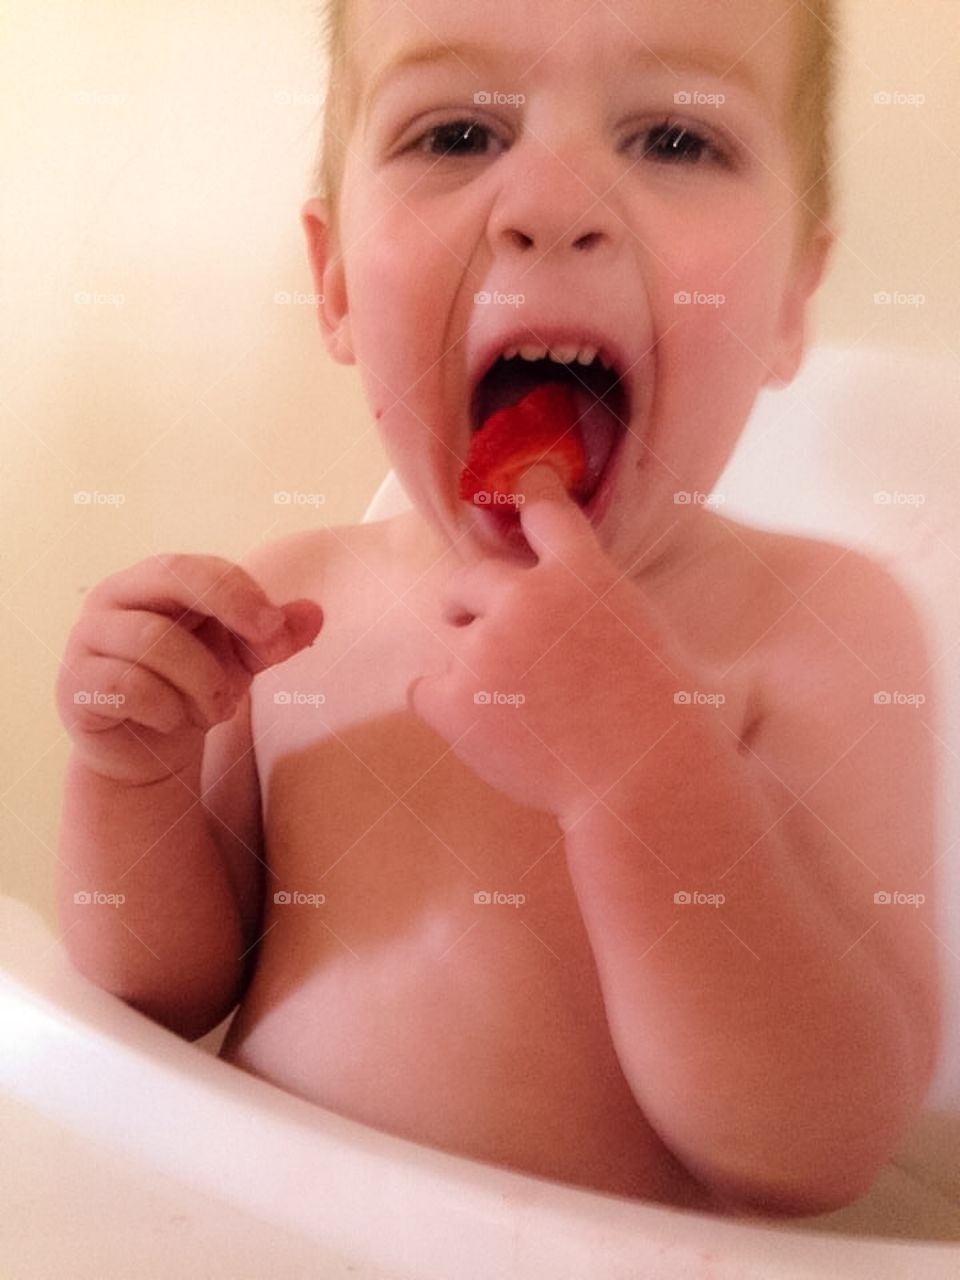 Big boy eating strawberries. 